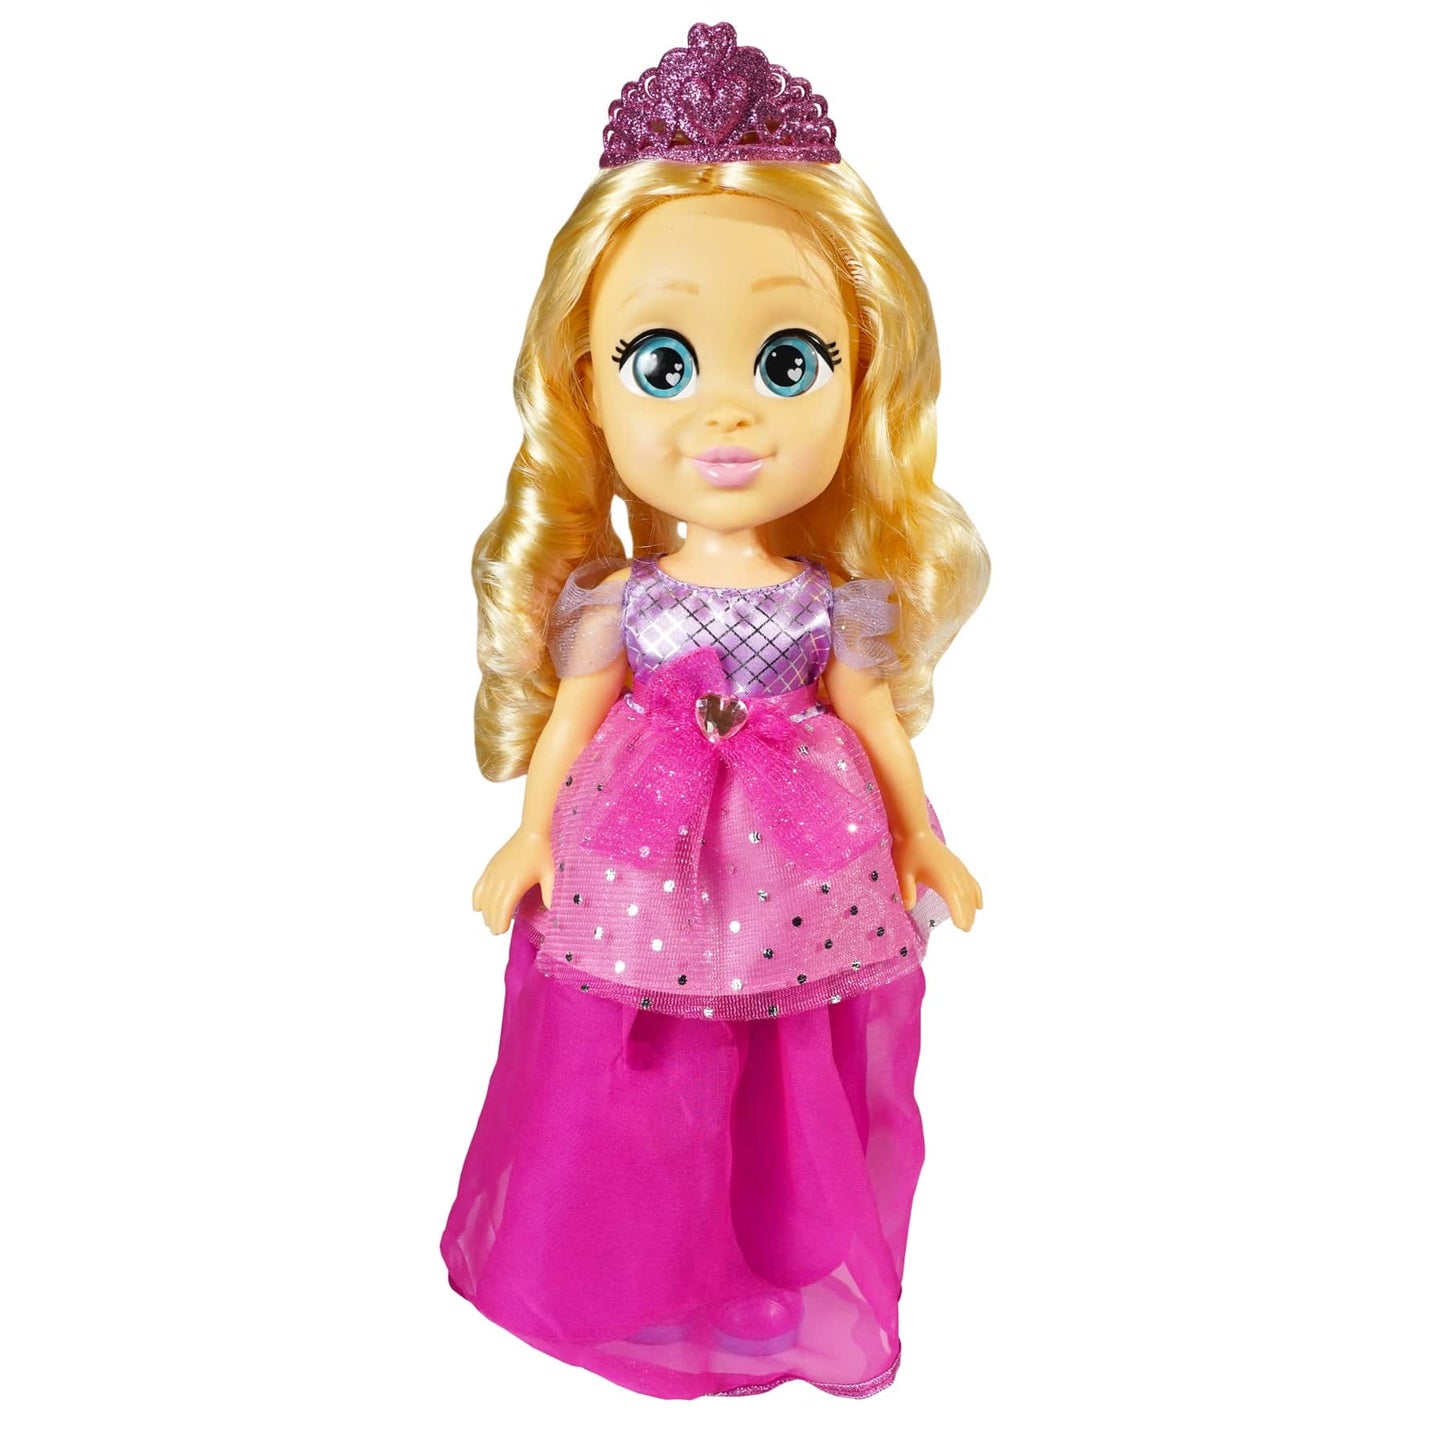 love diana Toys Love Diana Mashup Superhero & Princess Doll (33 cm)